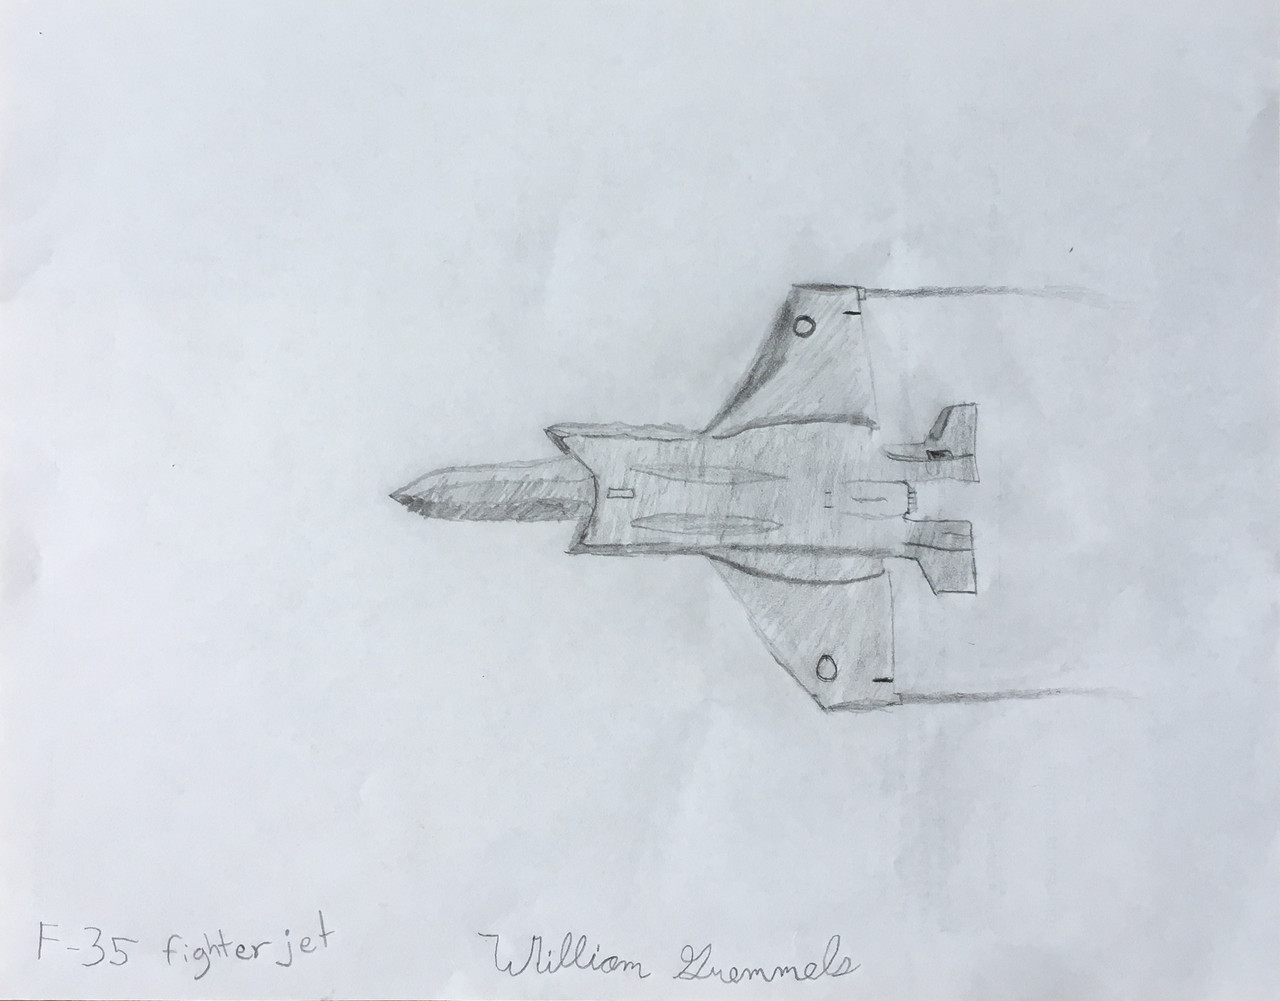 airplane drawing Ink jet fighter Mig-25 Foxbat artist Jerome Cadd | eBay